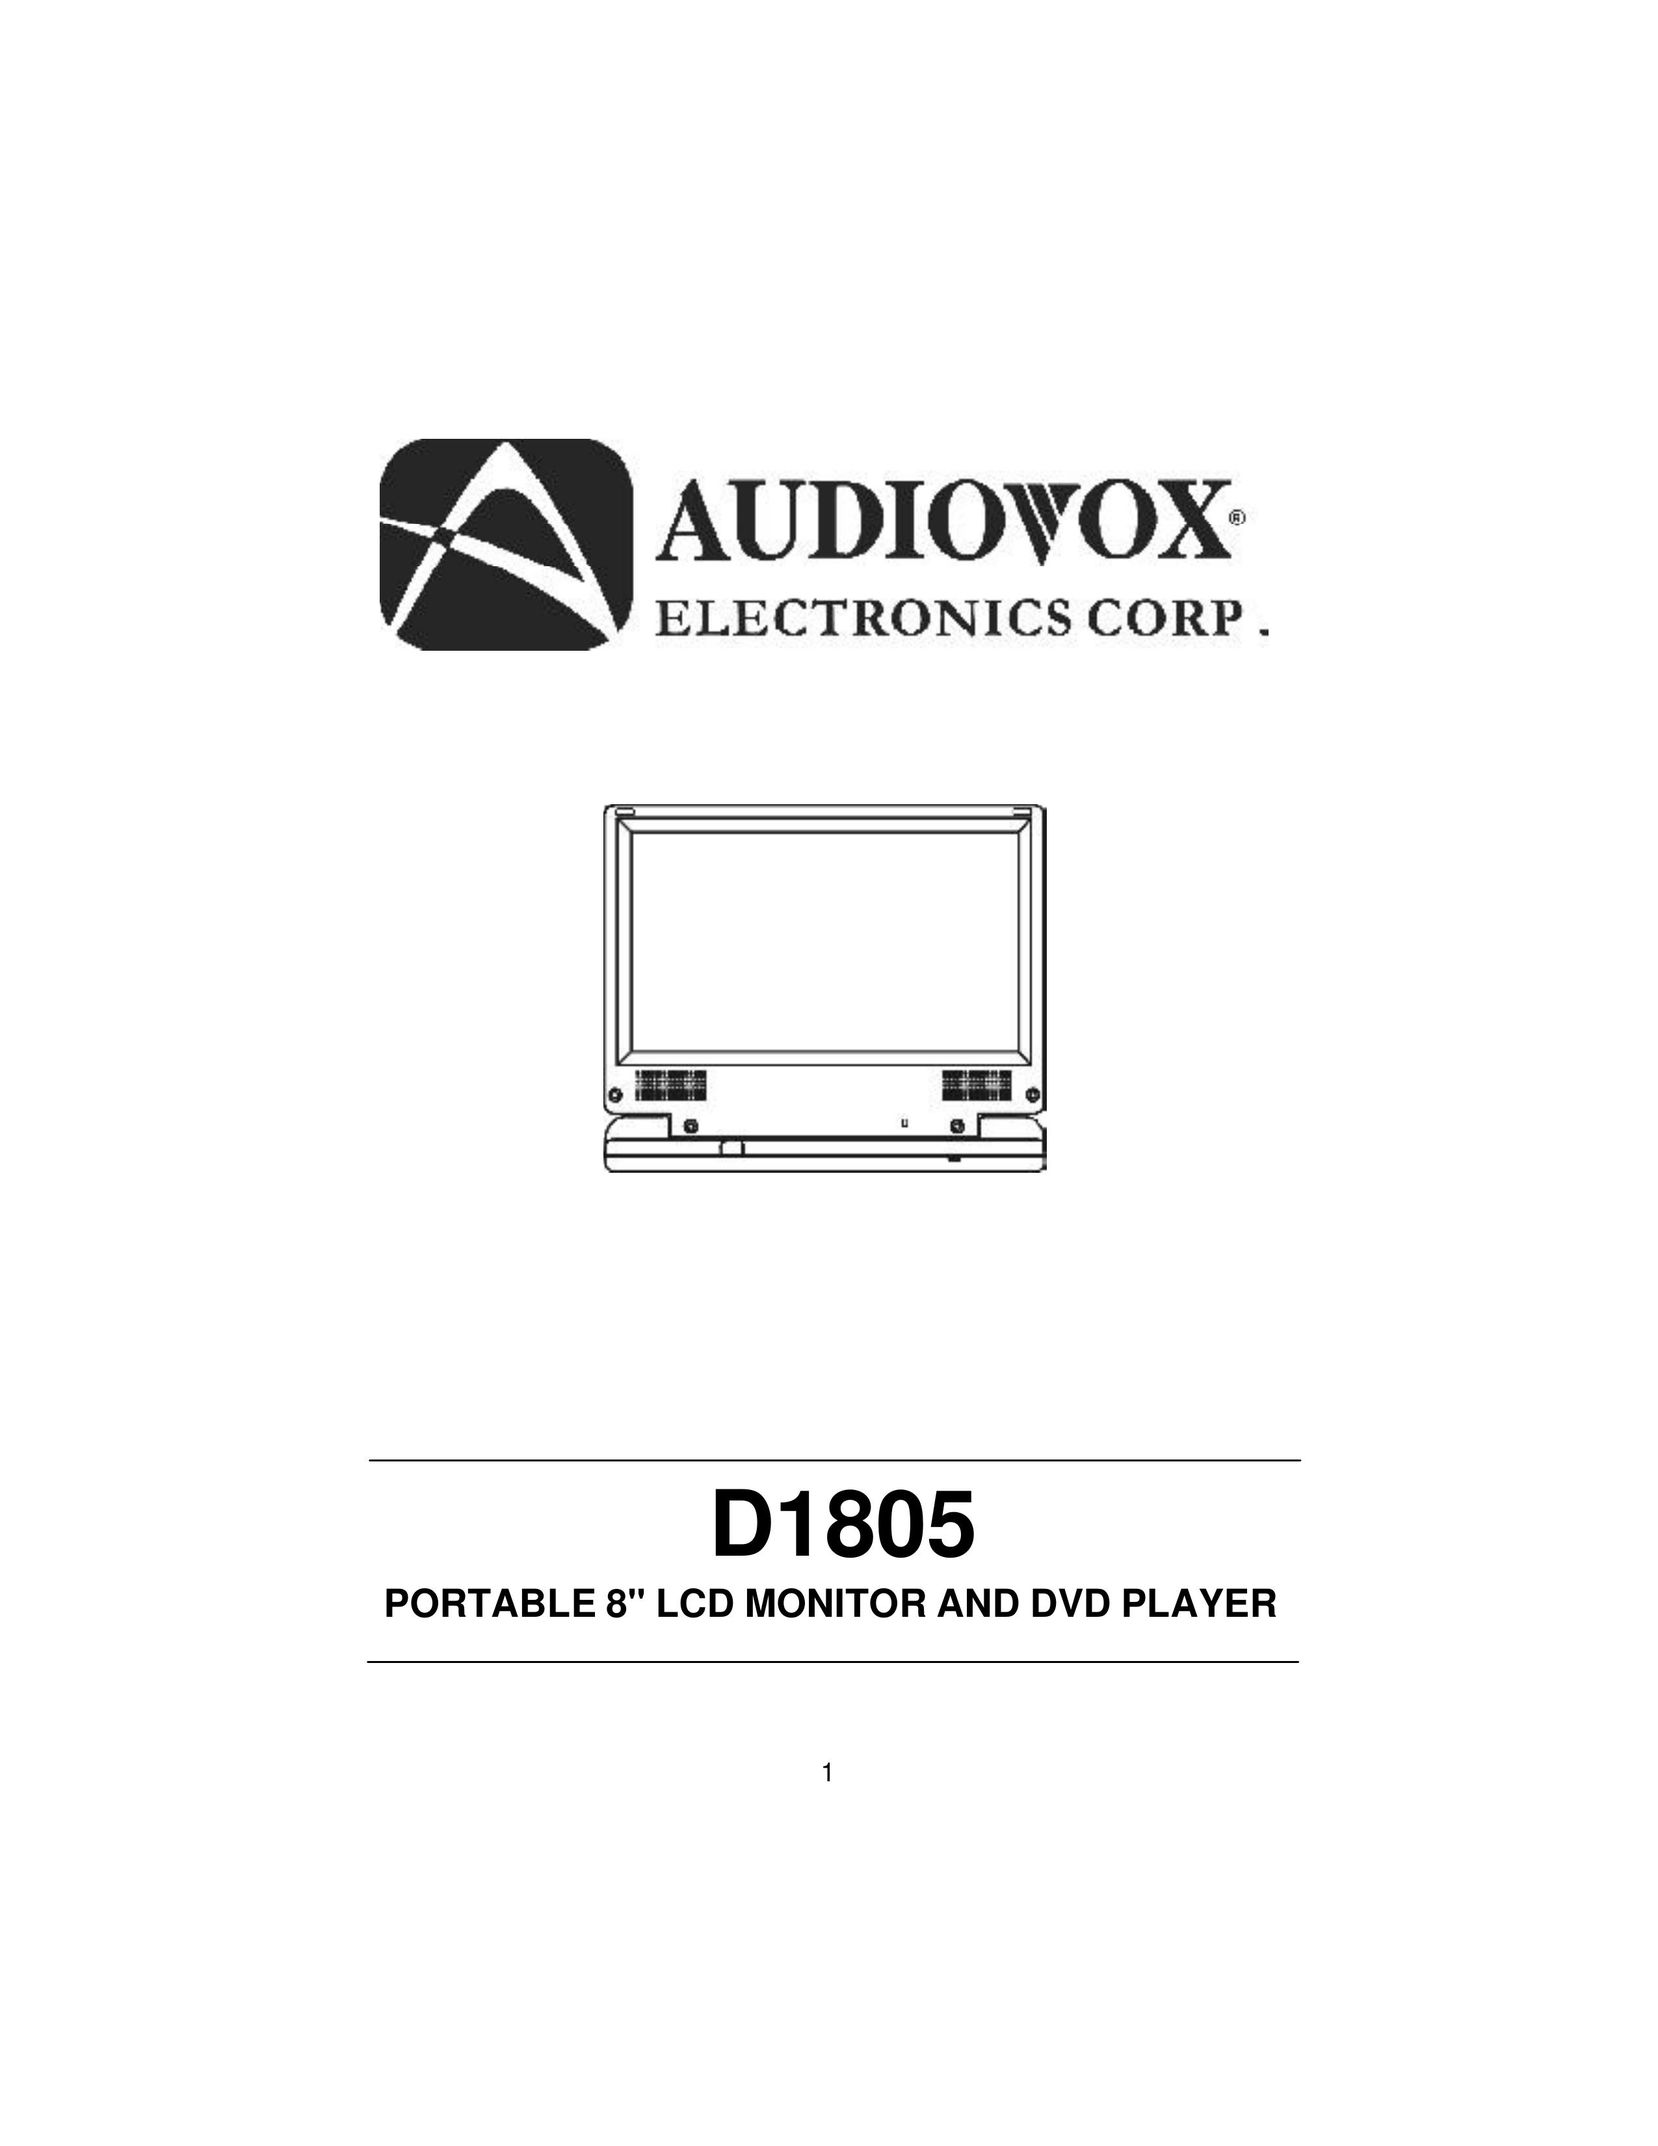 Audiovox D1805 Portable DVD Player User Manual